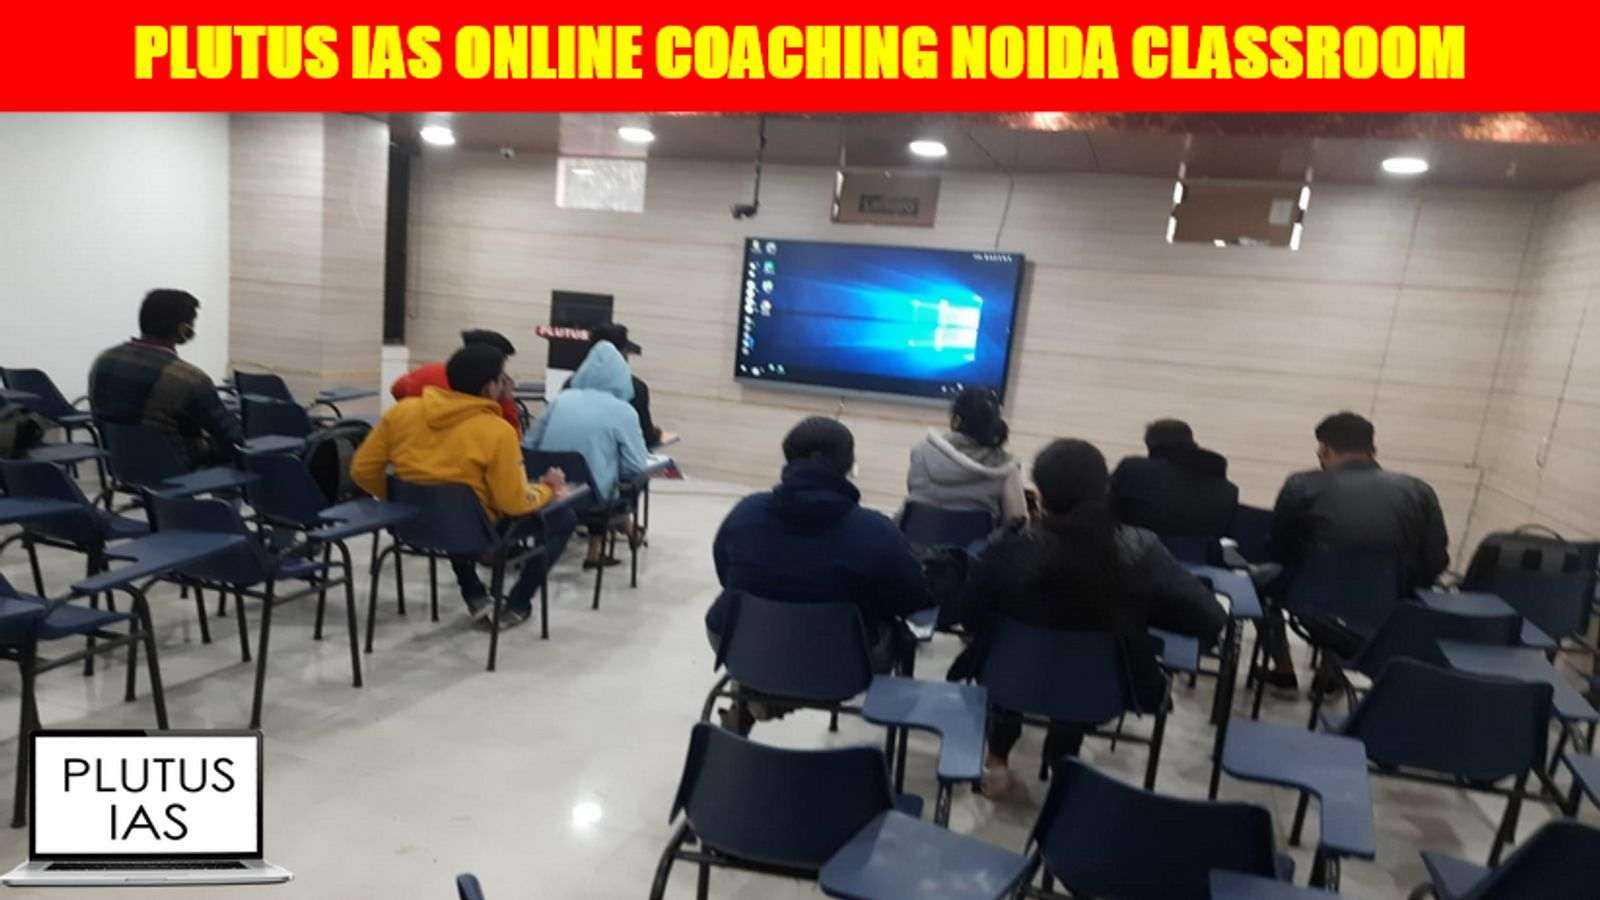 Plutus IAS Online Coaching Noida Class Room